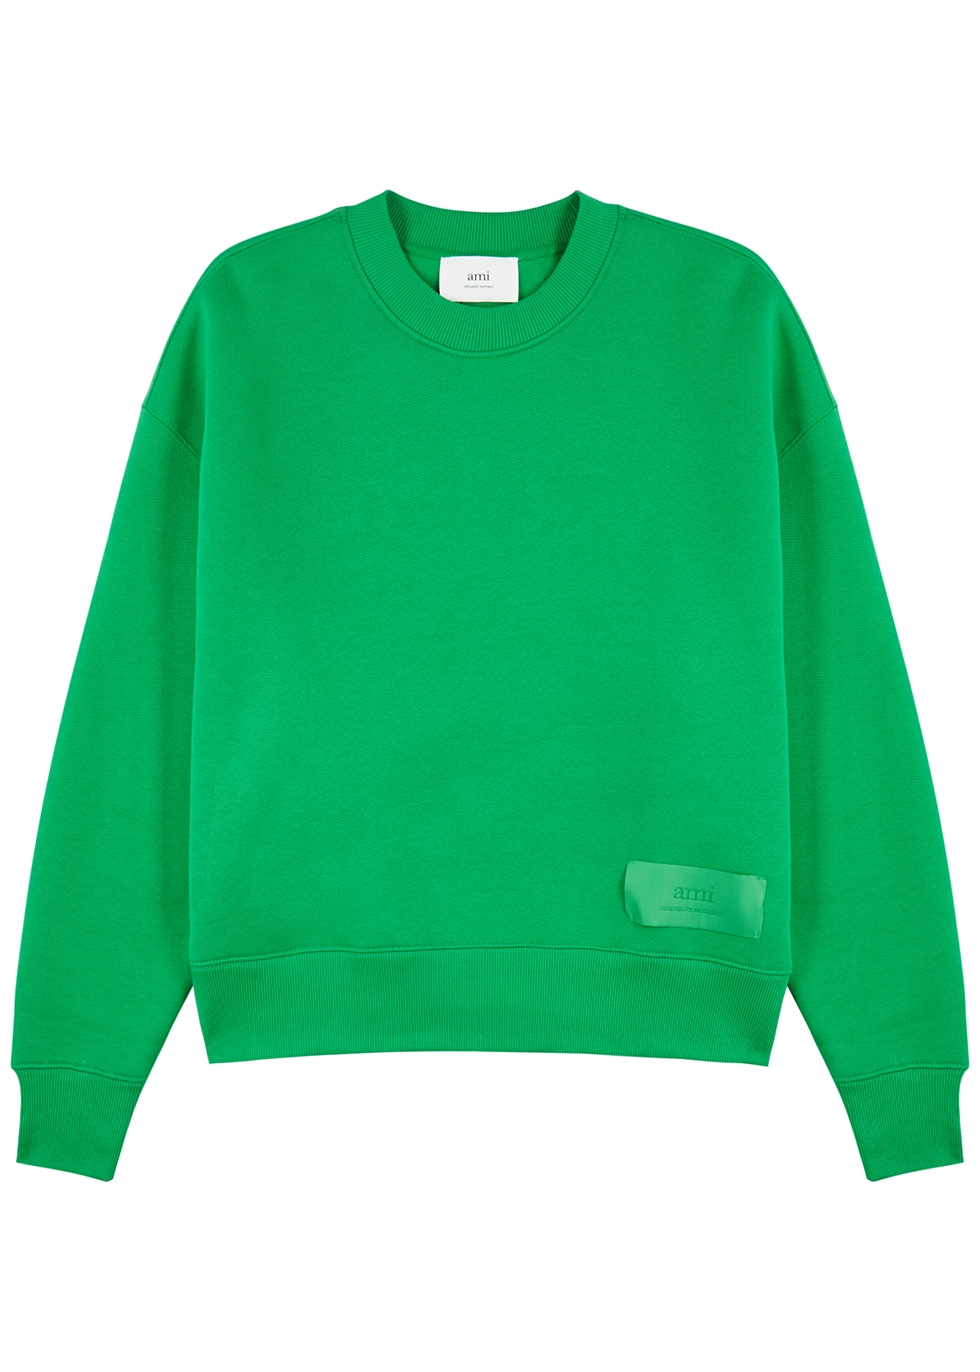 Green cotton-blend sweatshirt